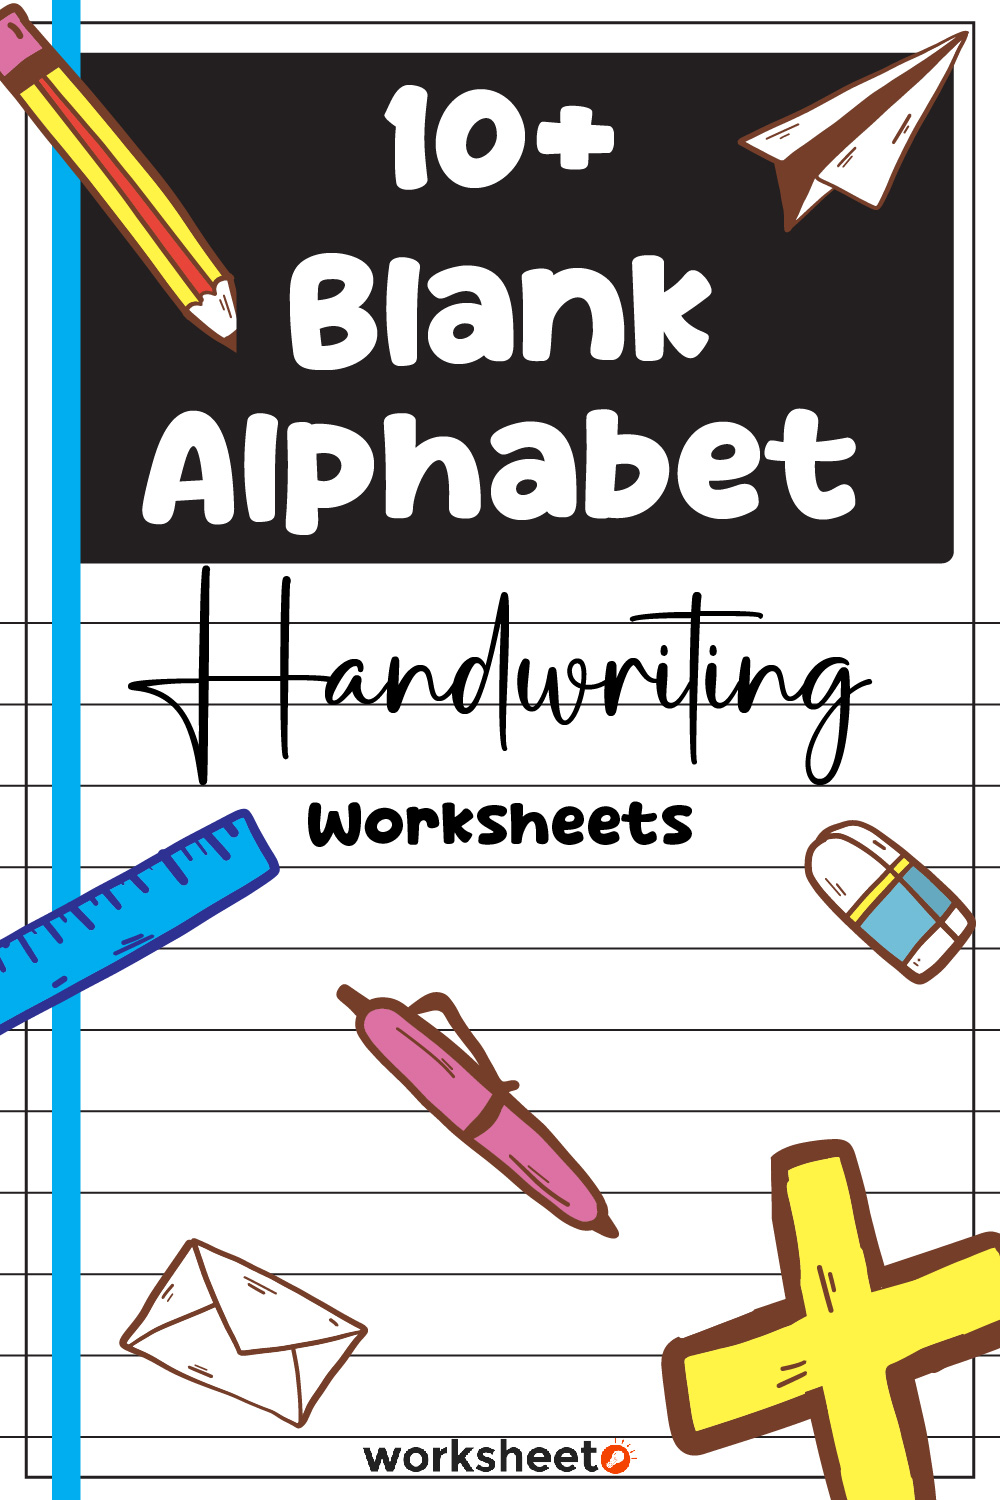 Blank Alphabet Handwriting Worksheets